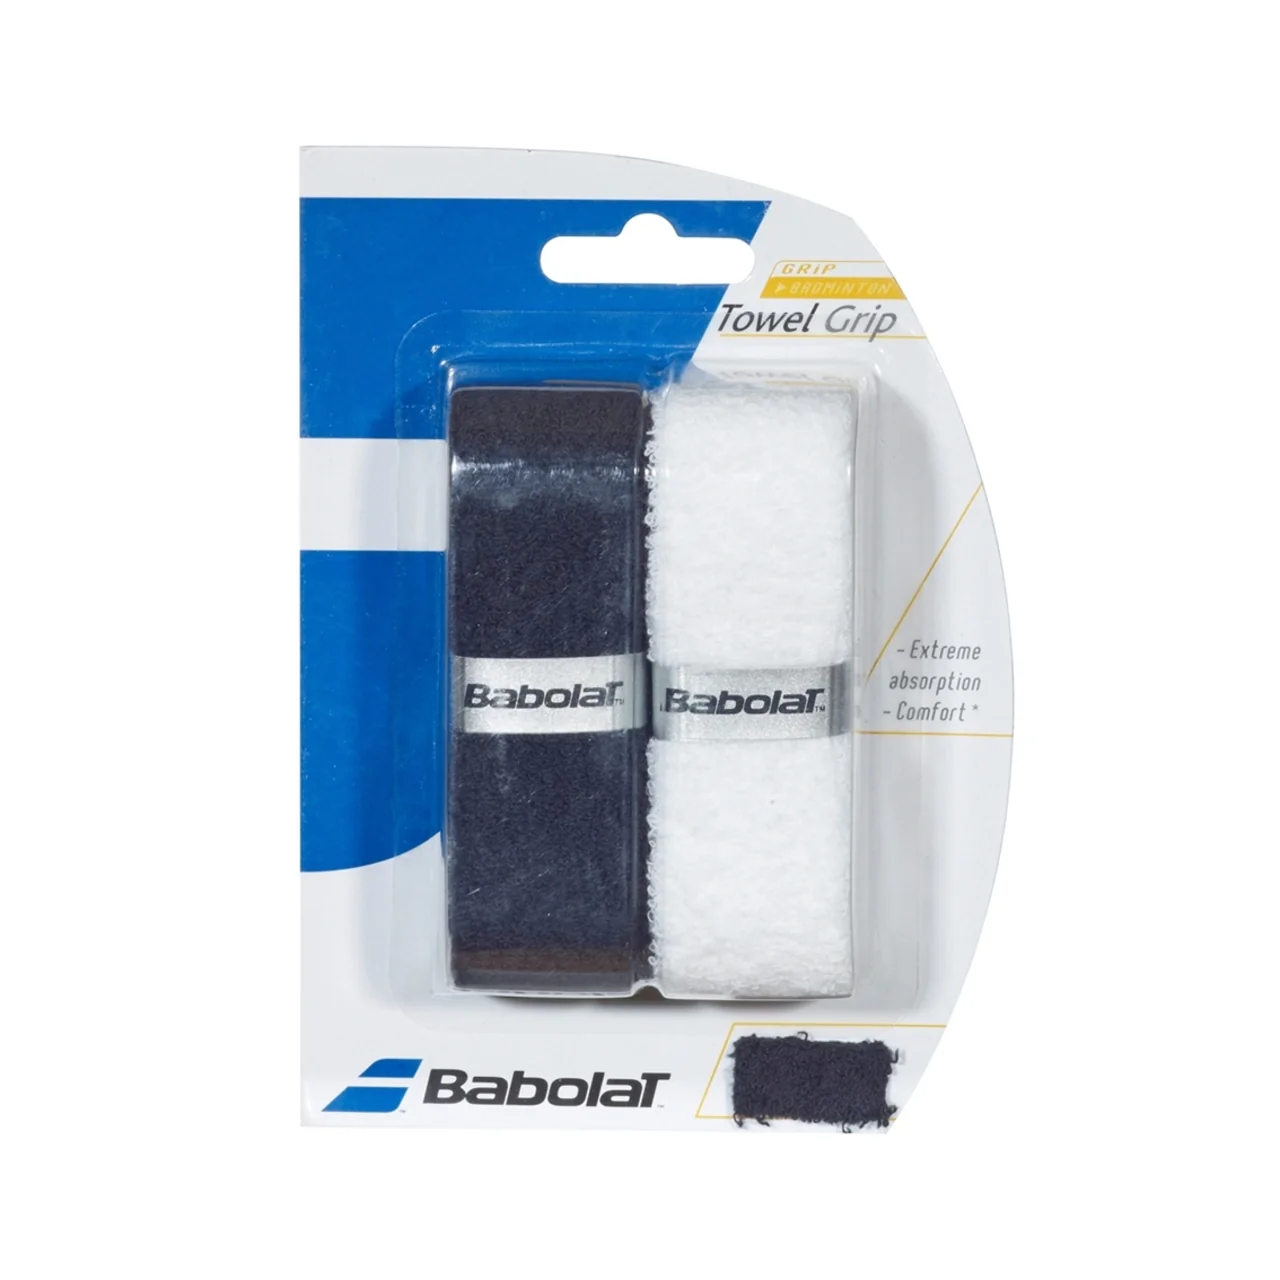 Babolat Towel Grip Black/White